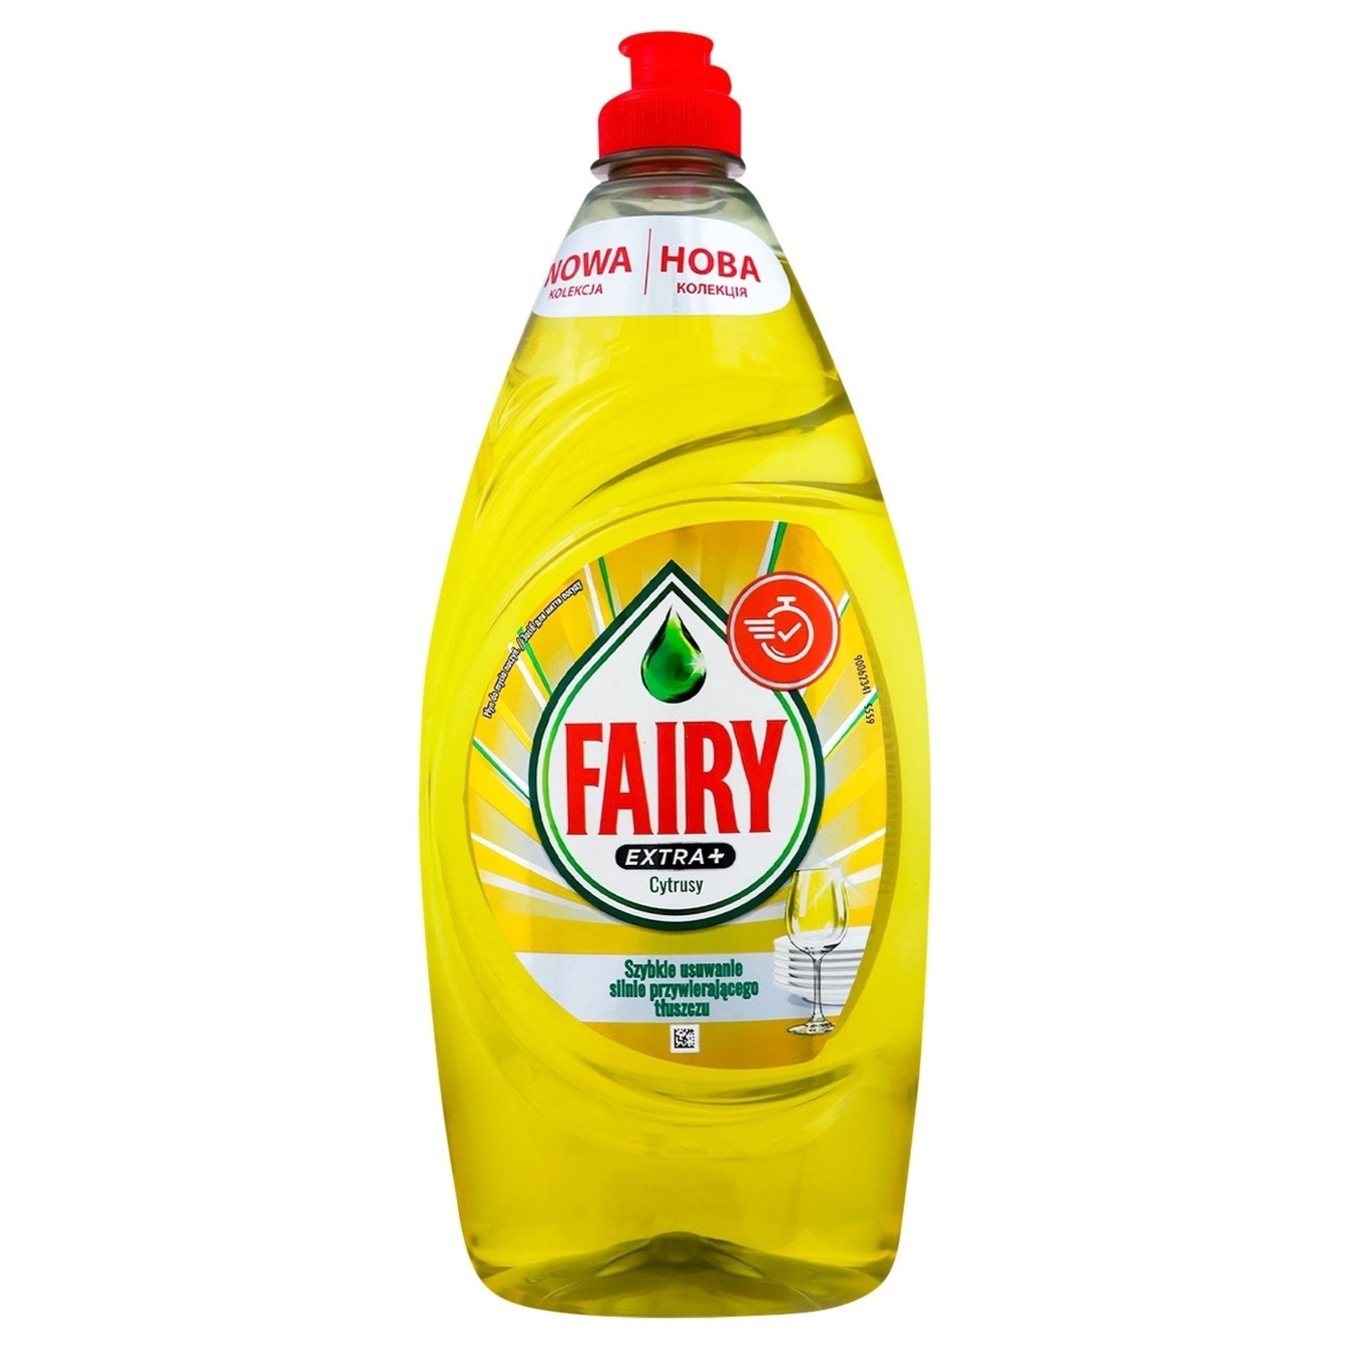 Dishwashing detergent Fairy Extra+ citrus 905 ml